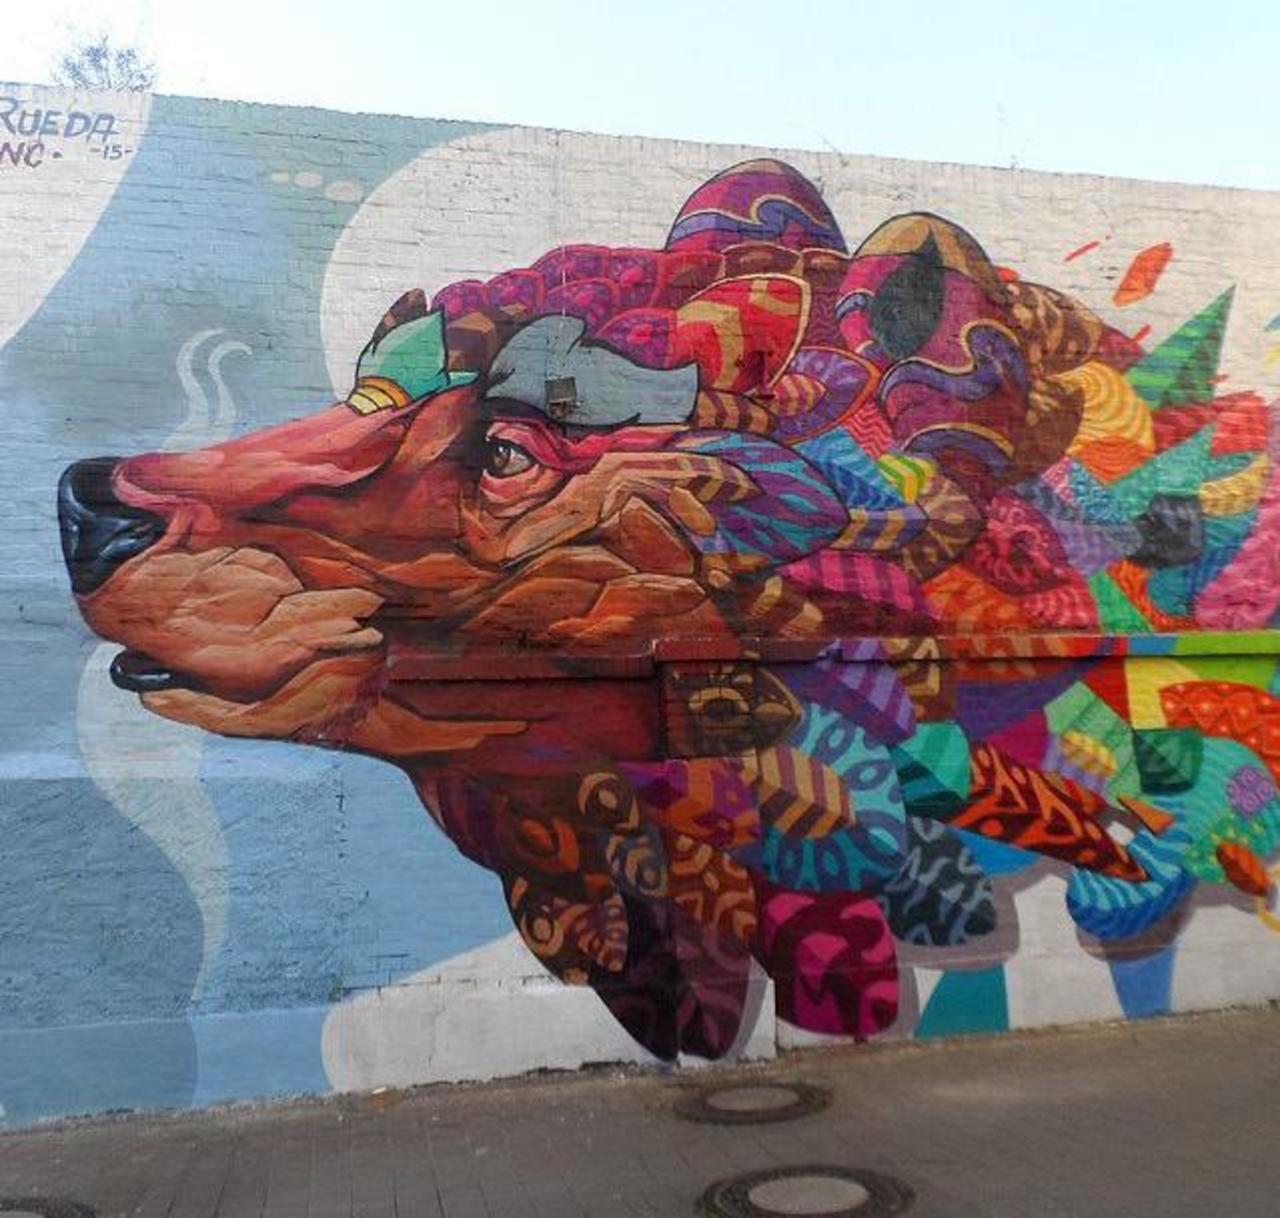 RT @BlossomTweetMe: I love this: Farid Rueda Street Art 

#art #graffiti #mural #streetart http://t.co/xfEioyyDvb MT @GoogleStreetArt